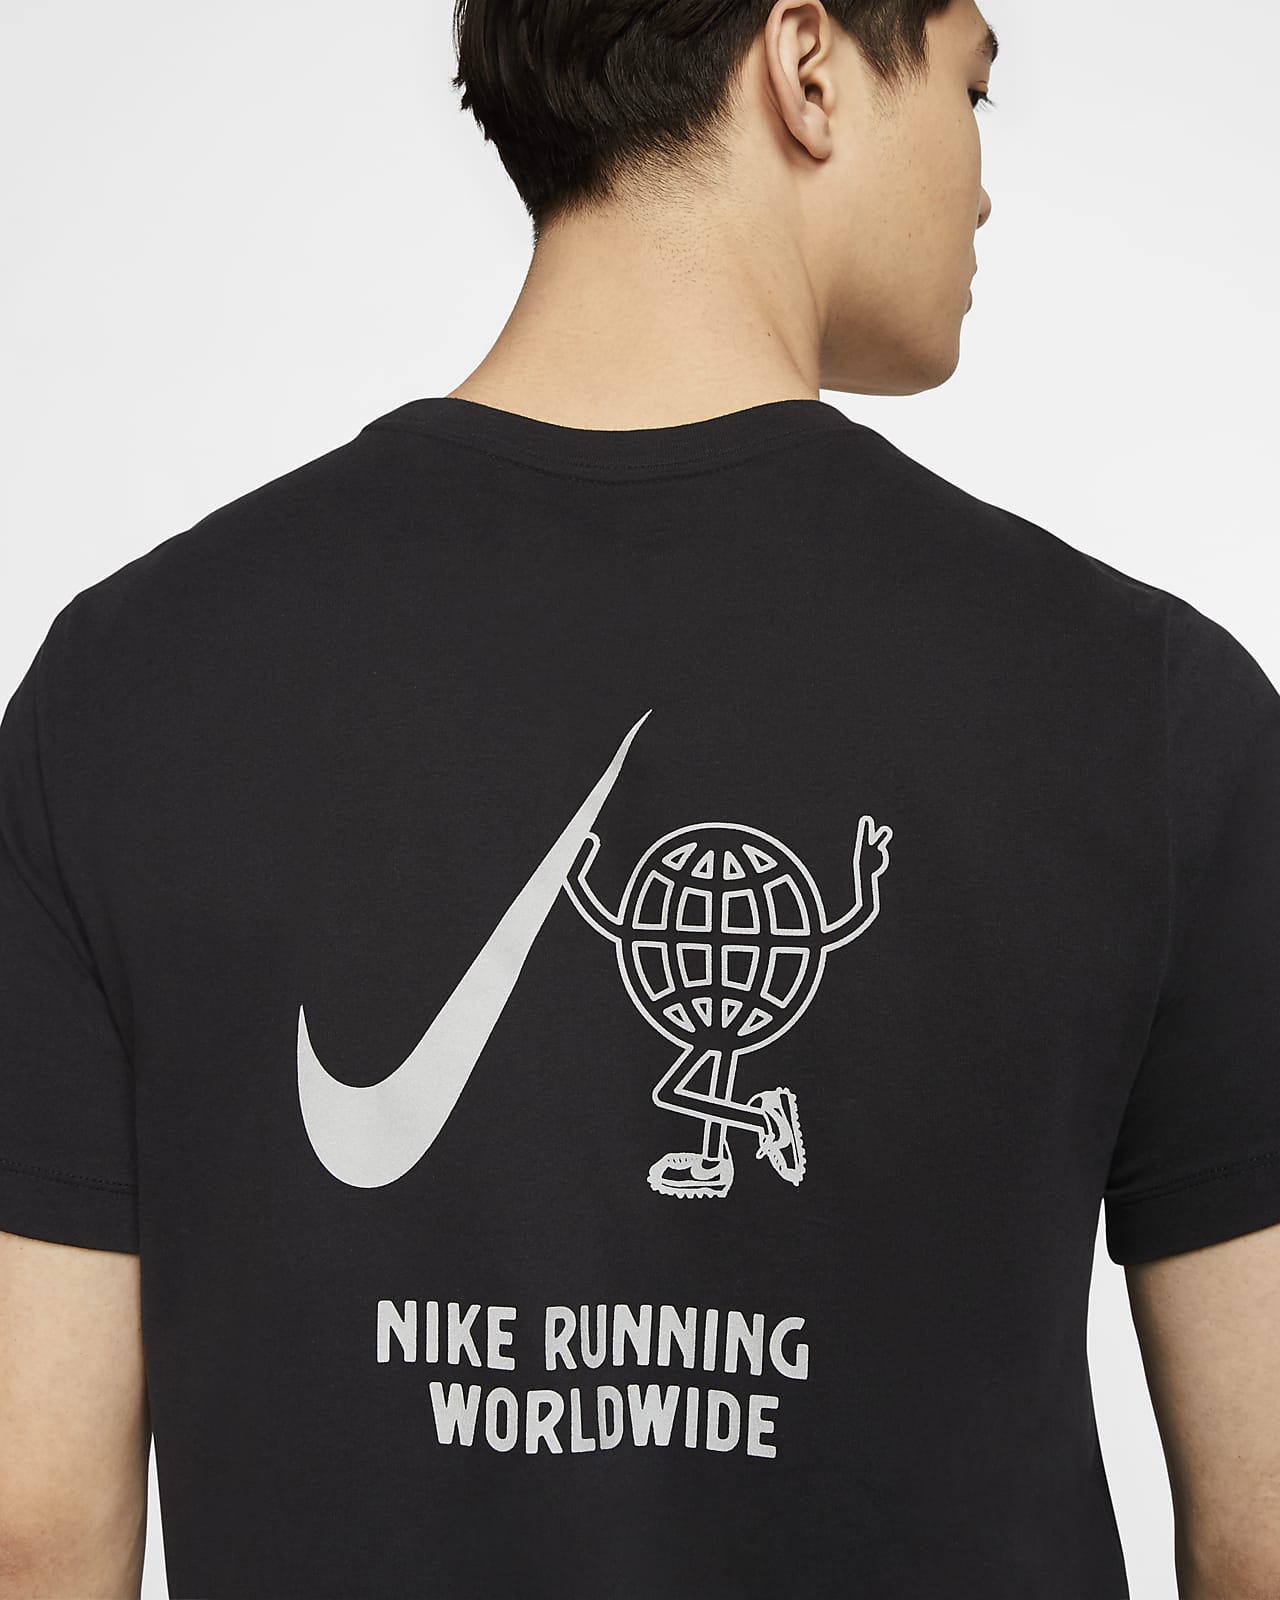 nike running fit